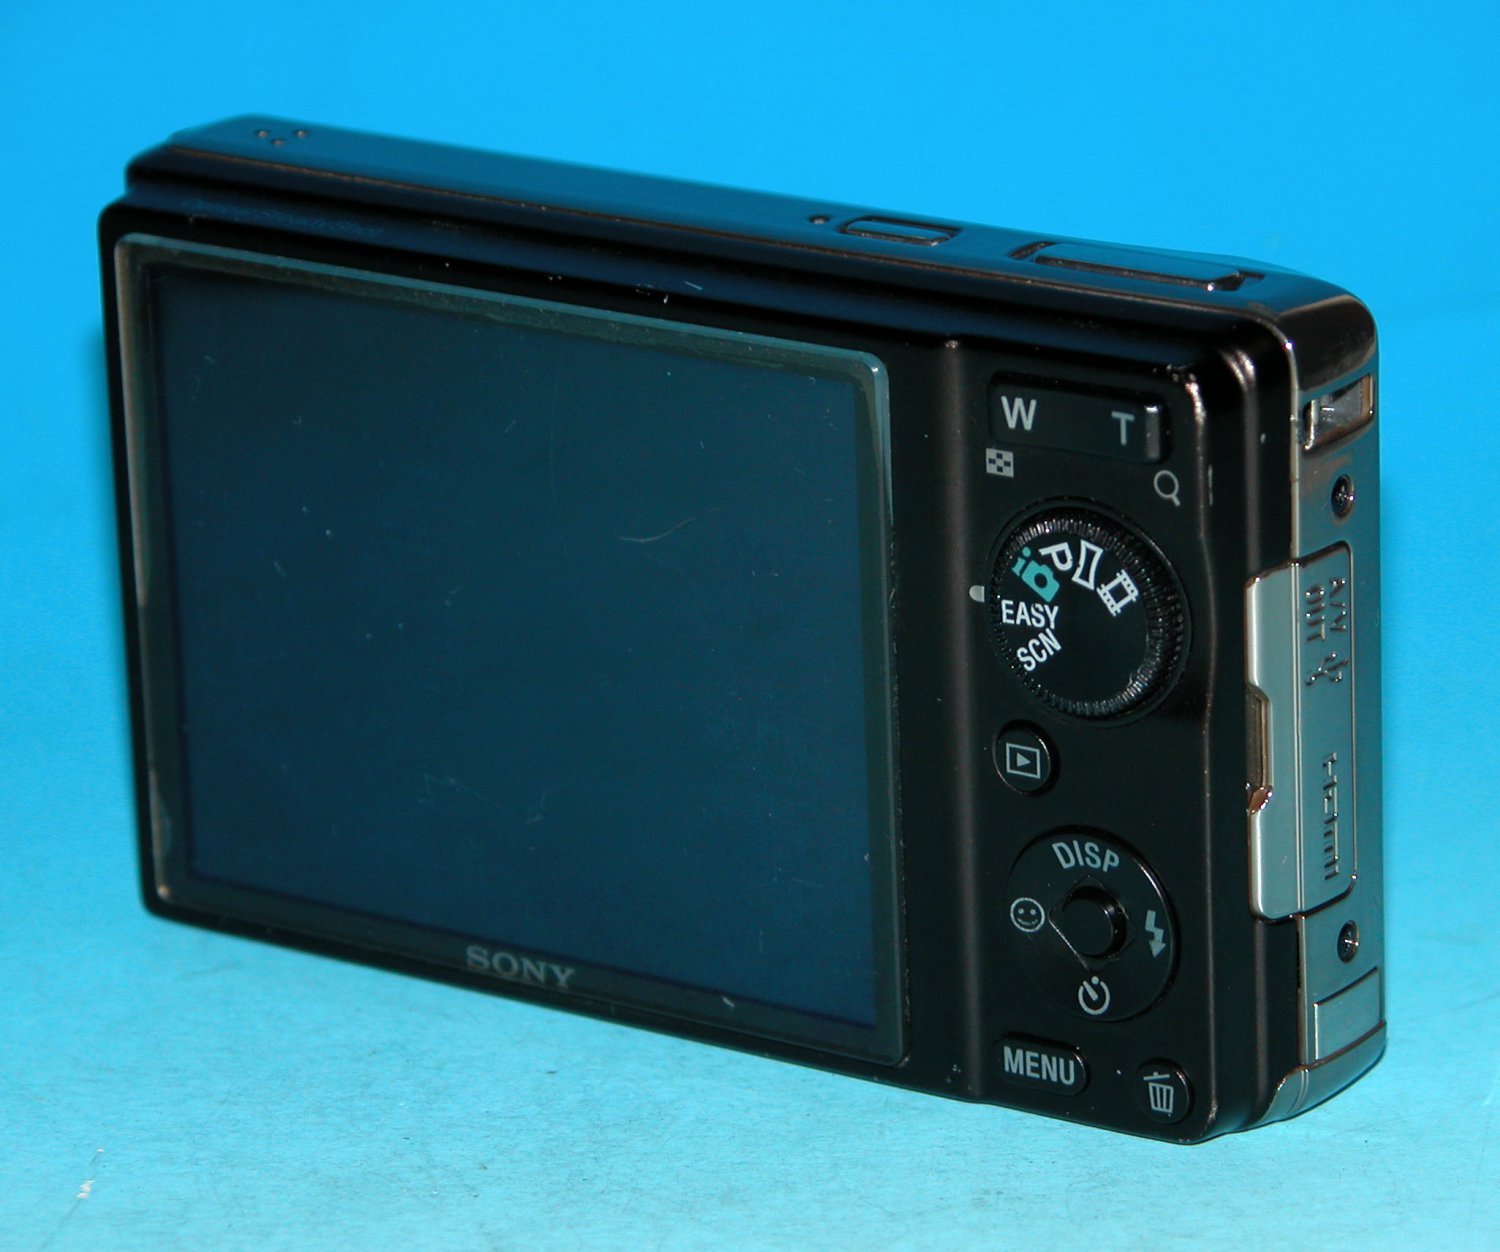 Sony Cyber-shot DSC-W370 14.1MP Digital Camera - Black #3435